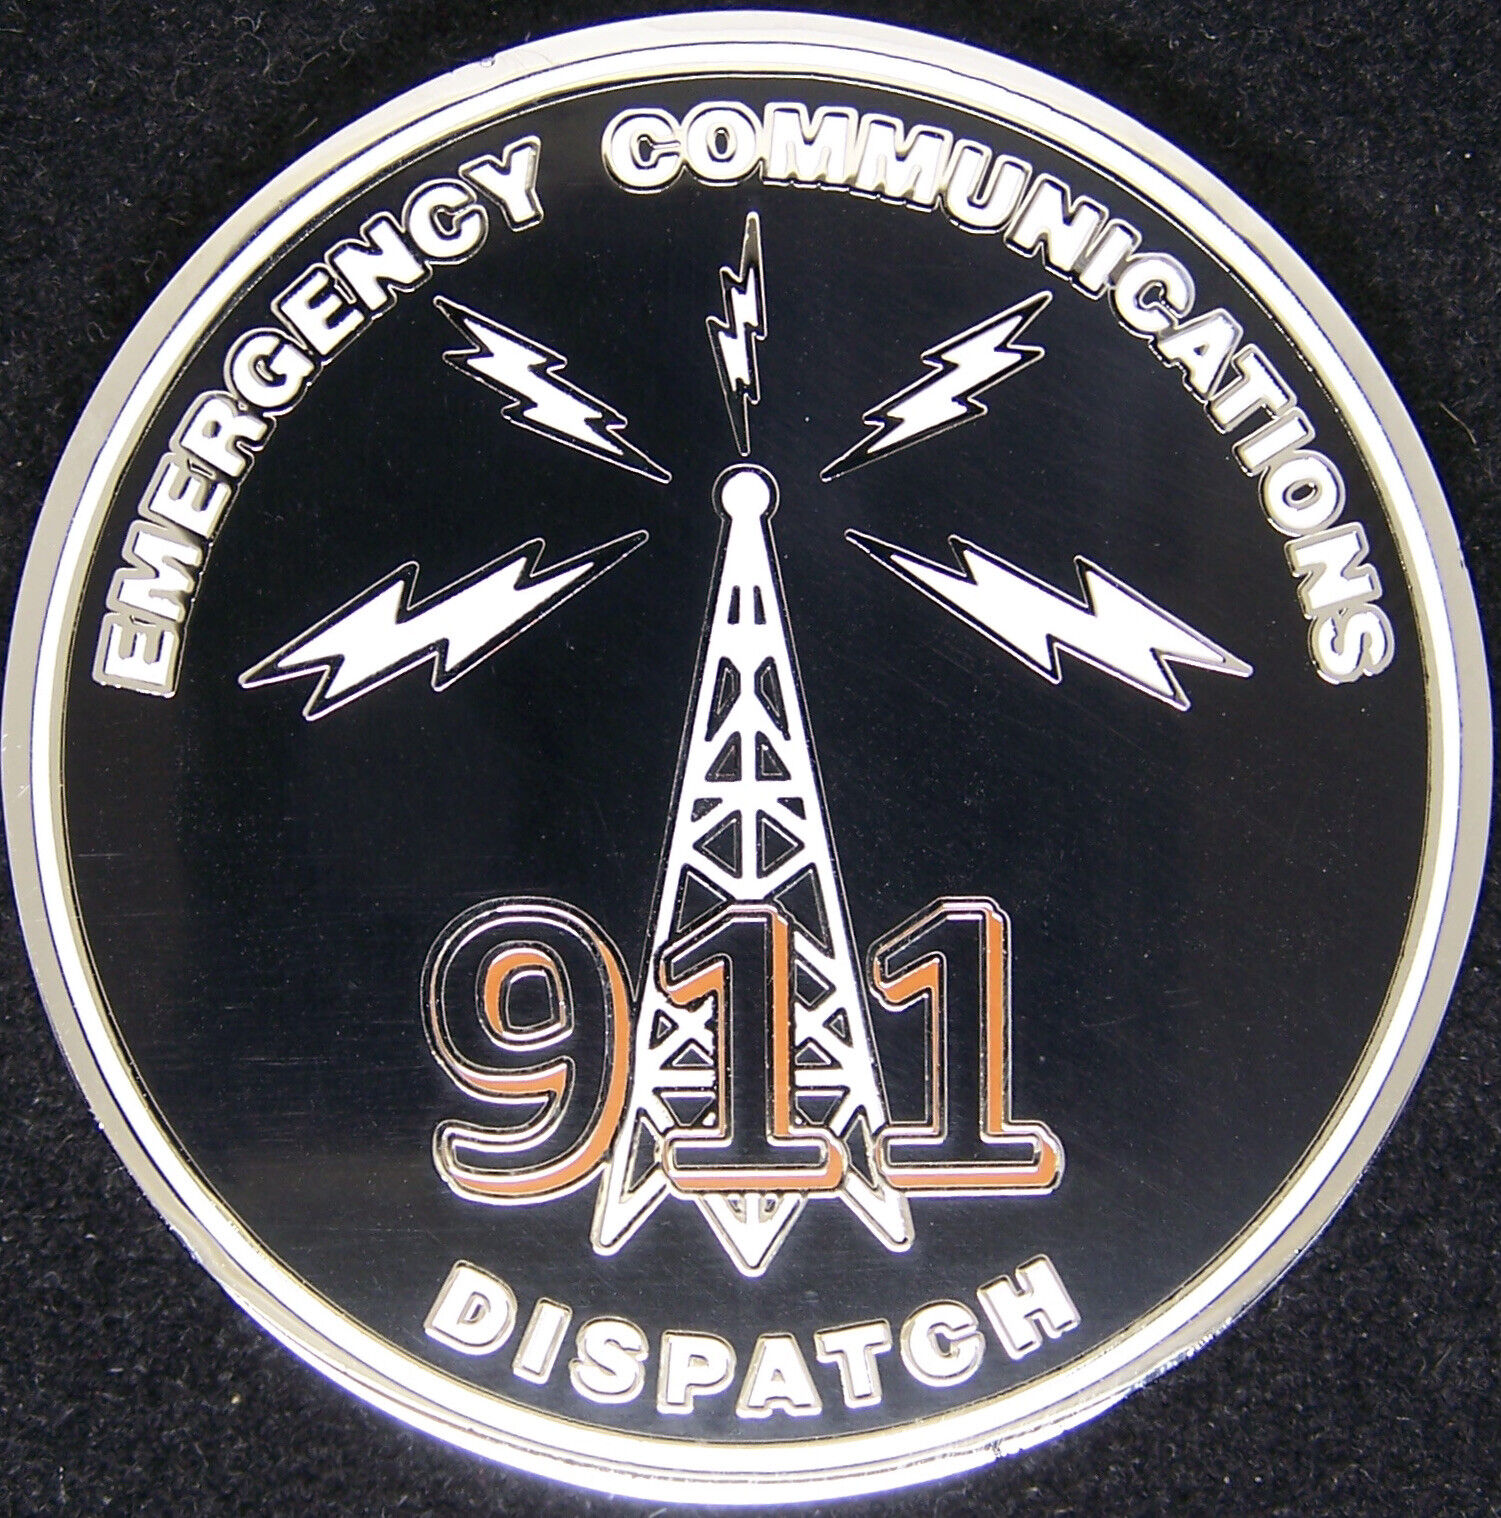 Emergency Communications Dispatch 911 Unique Challenge Coin